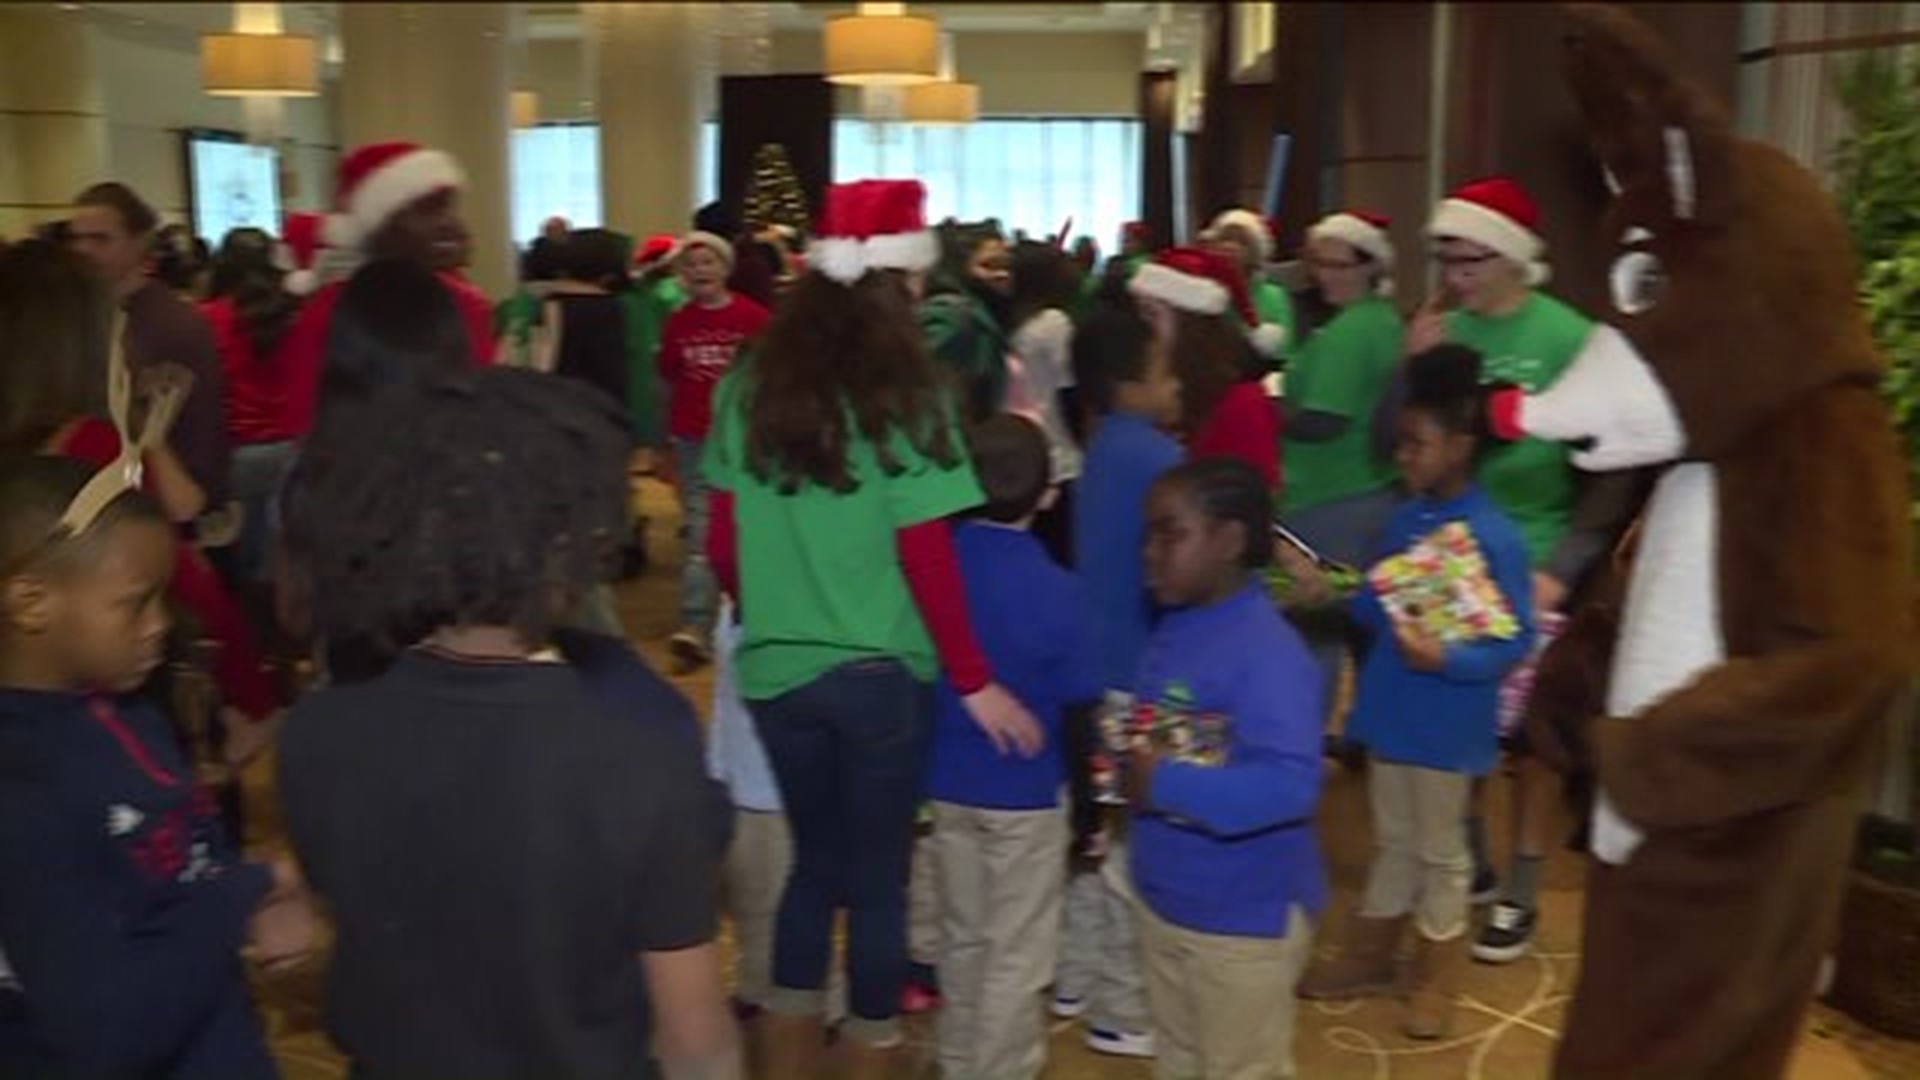 Hartford kids get holiday cheer at annual party